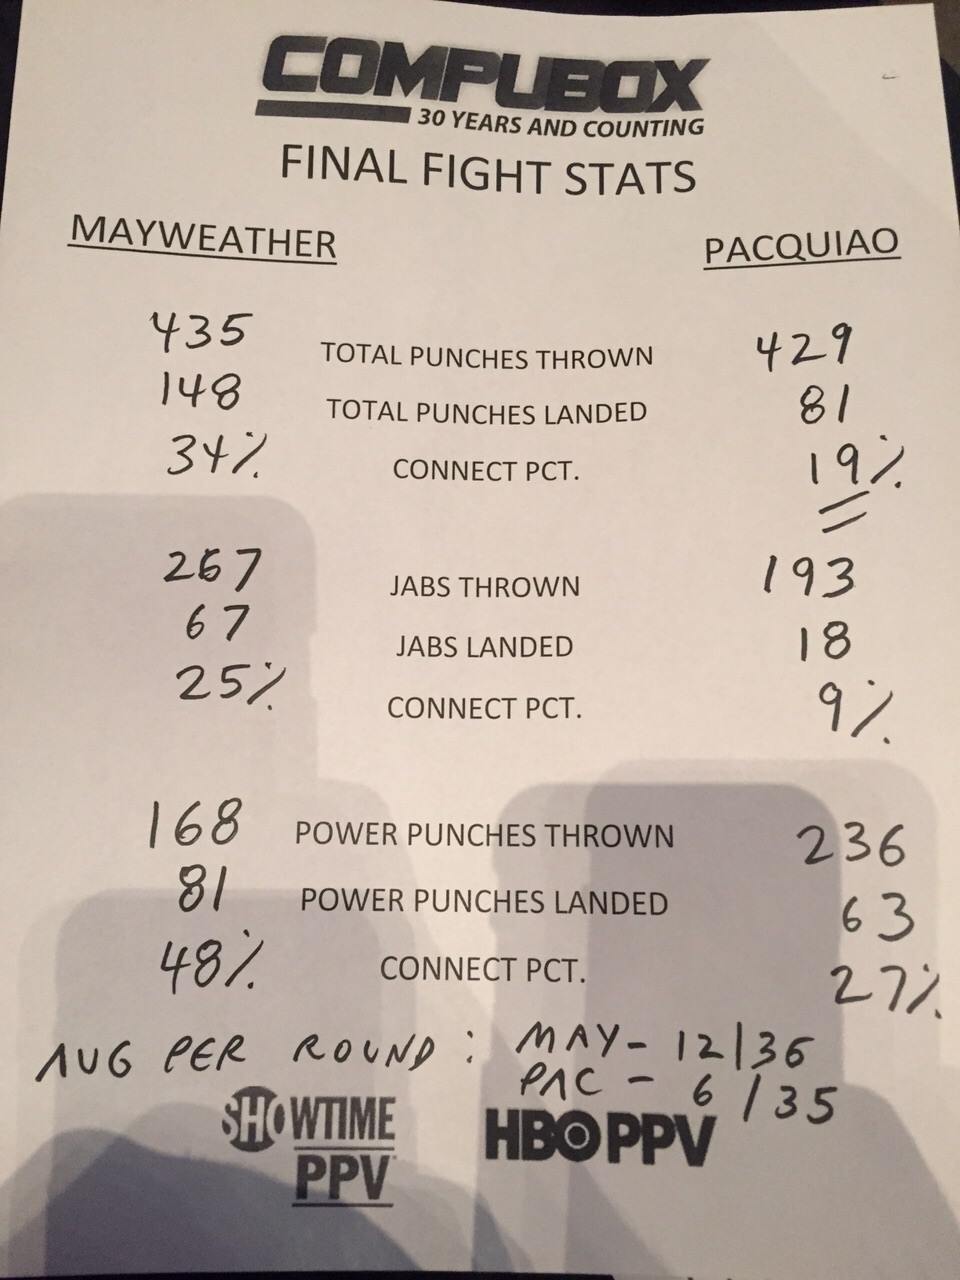 Final fight stats